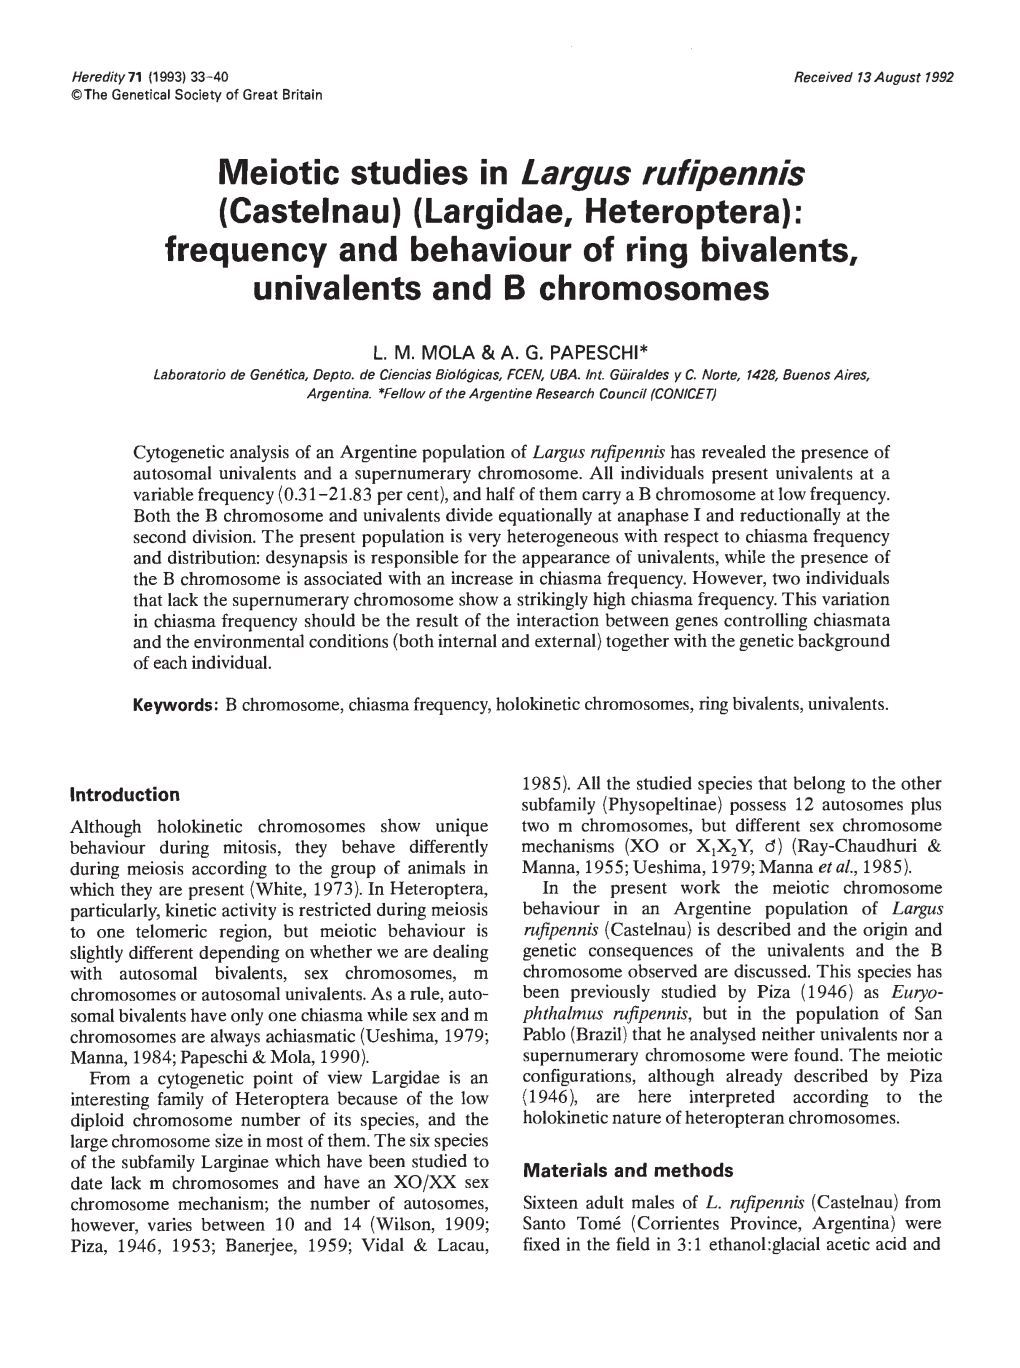 Meiotic Studies in Largus Rufipennis (Castelnau) (Largidae, Heteroptera): Frequency and Behaviour of Ring Bivalents, Univalents and B Chromosomes